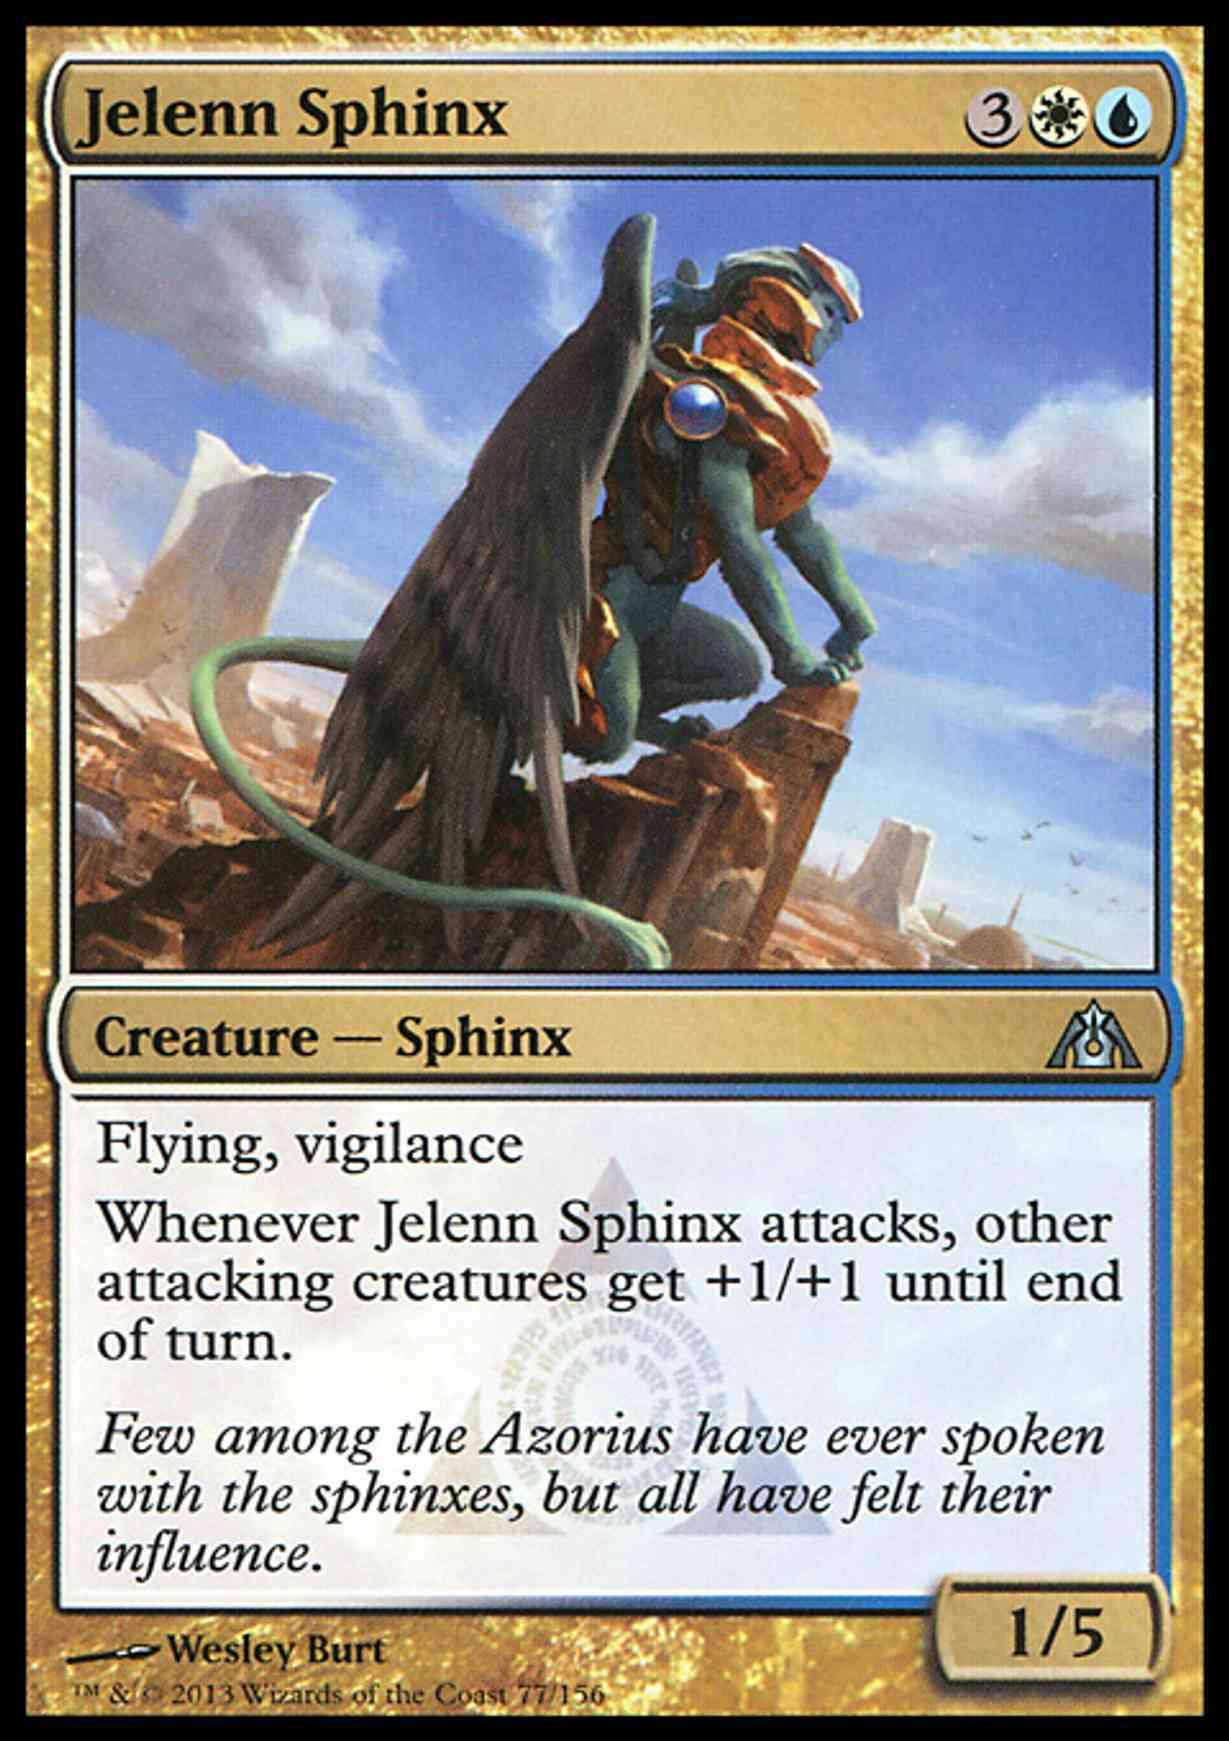 Jelenn Sphinx magic card front